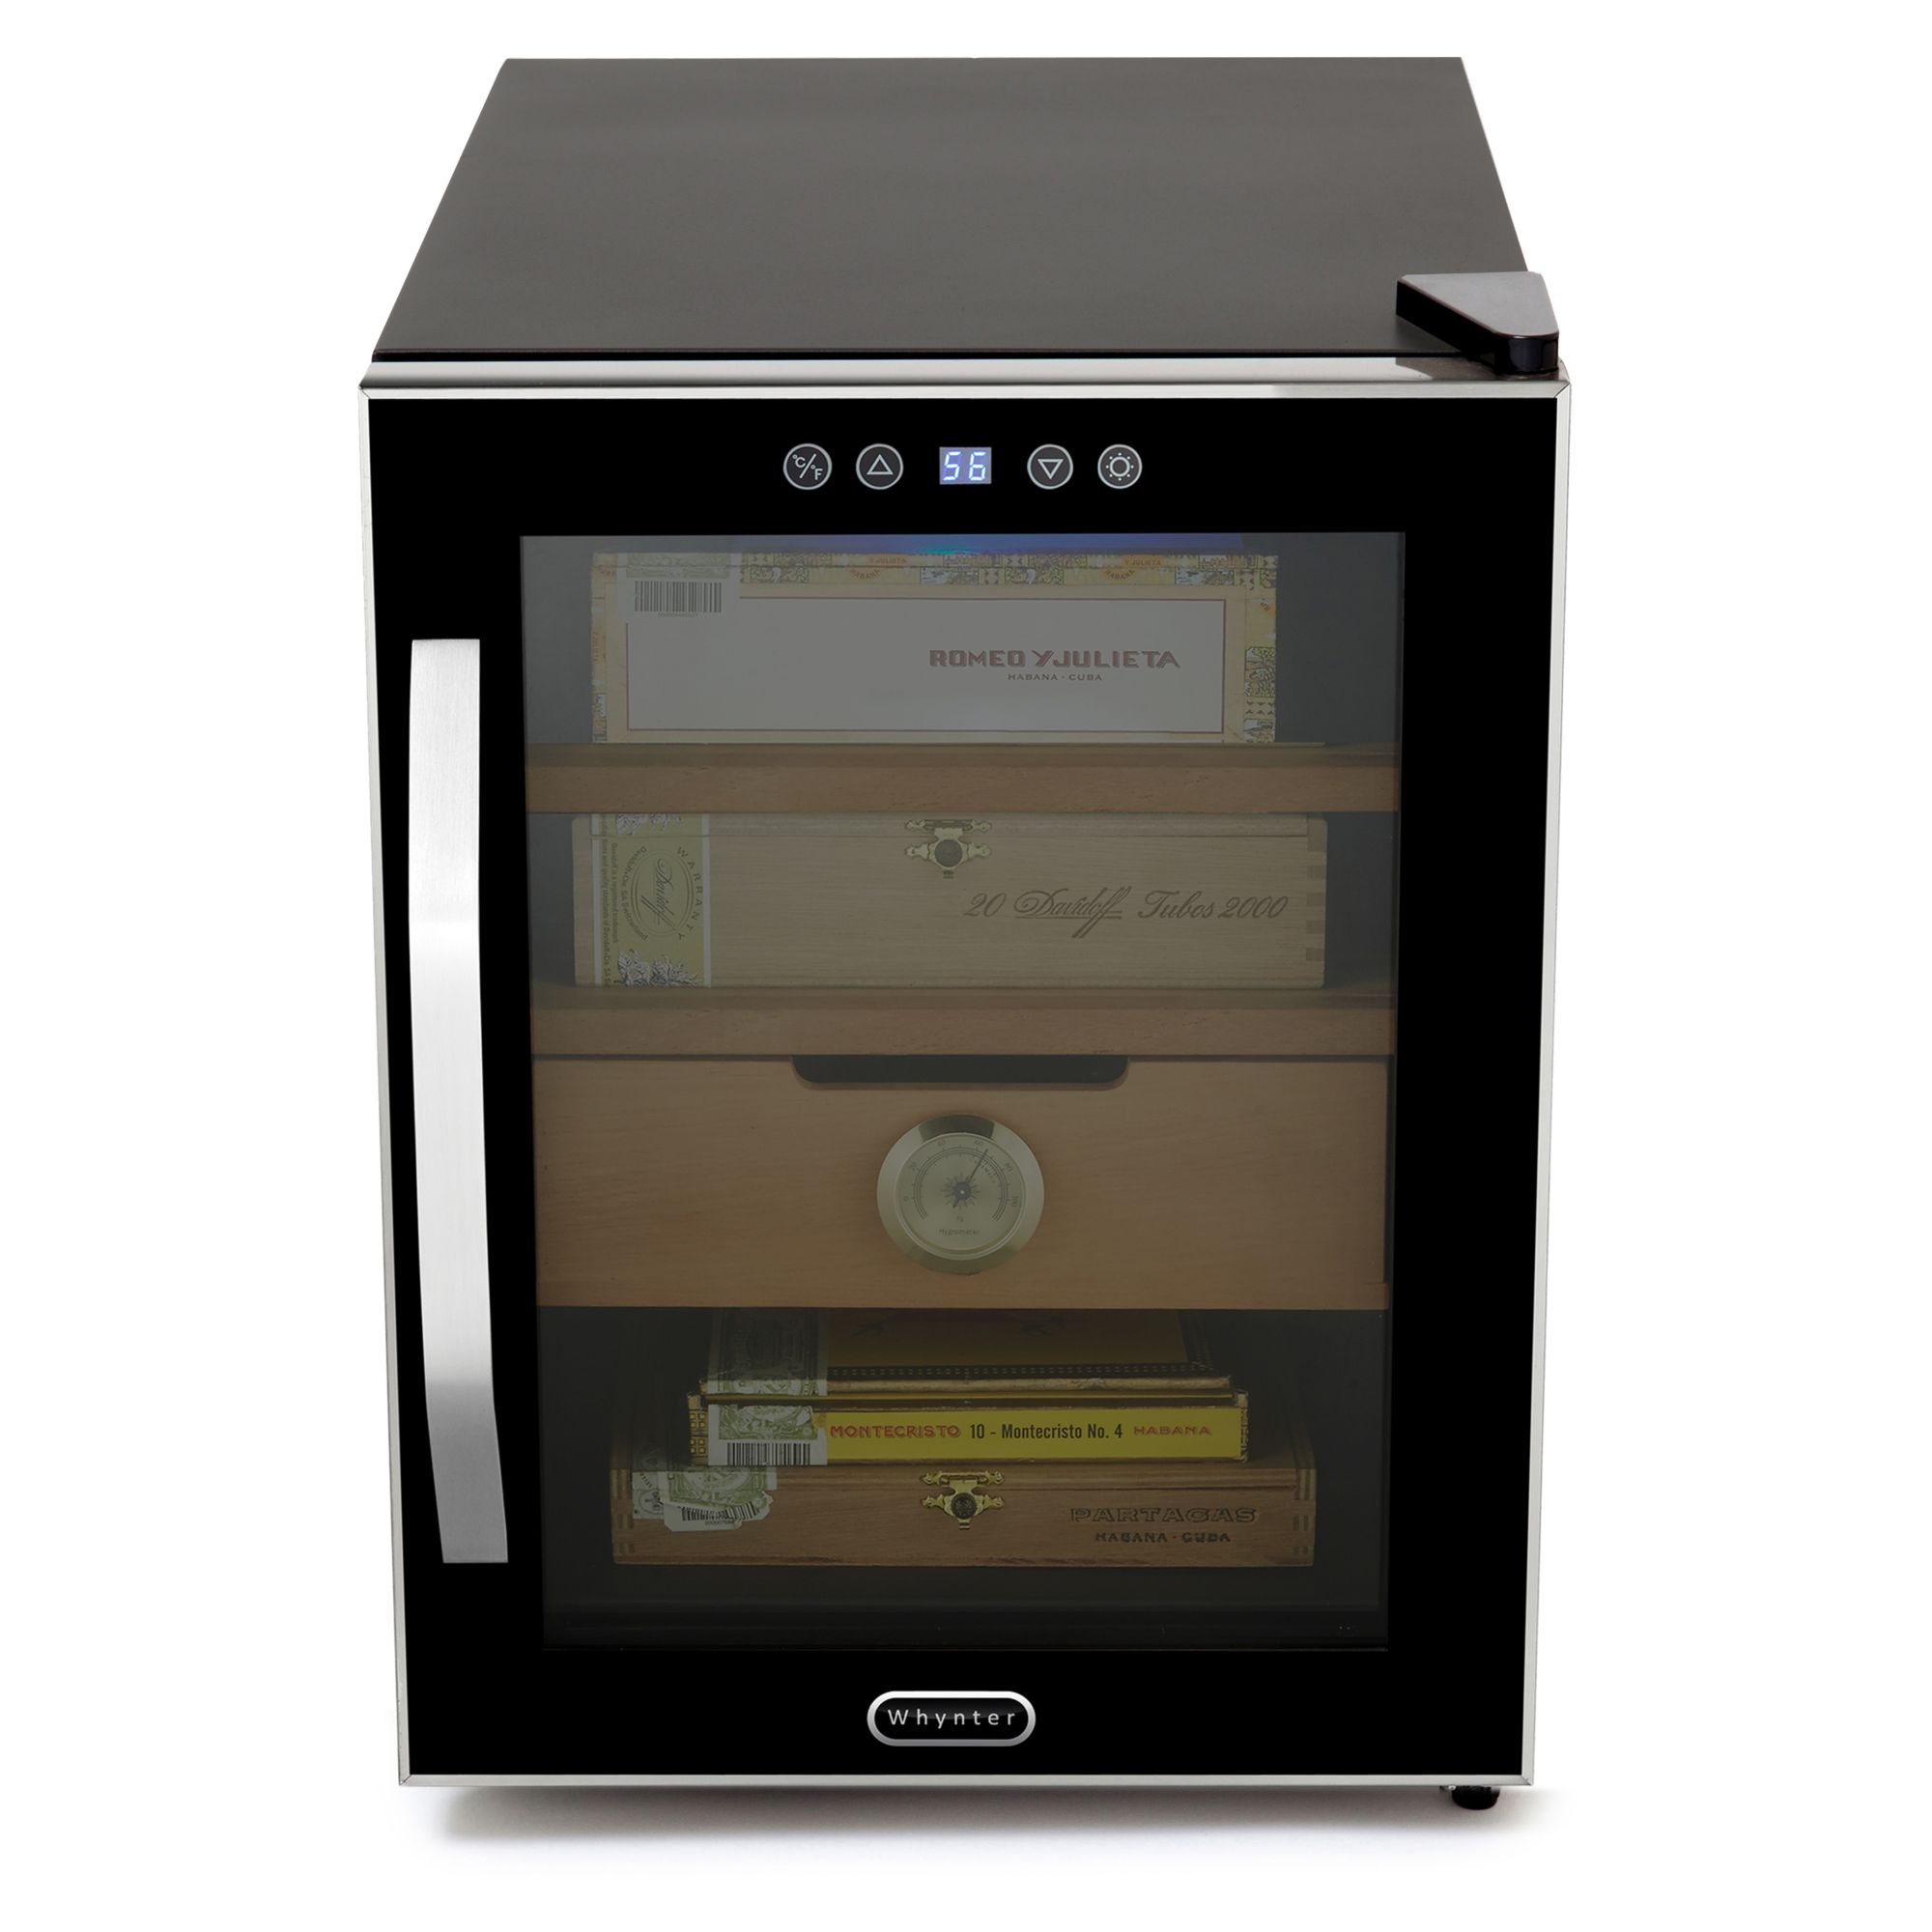 Hisense 1.6 cu. ft. Compact Refrigerator (WMS017M6XVE)